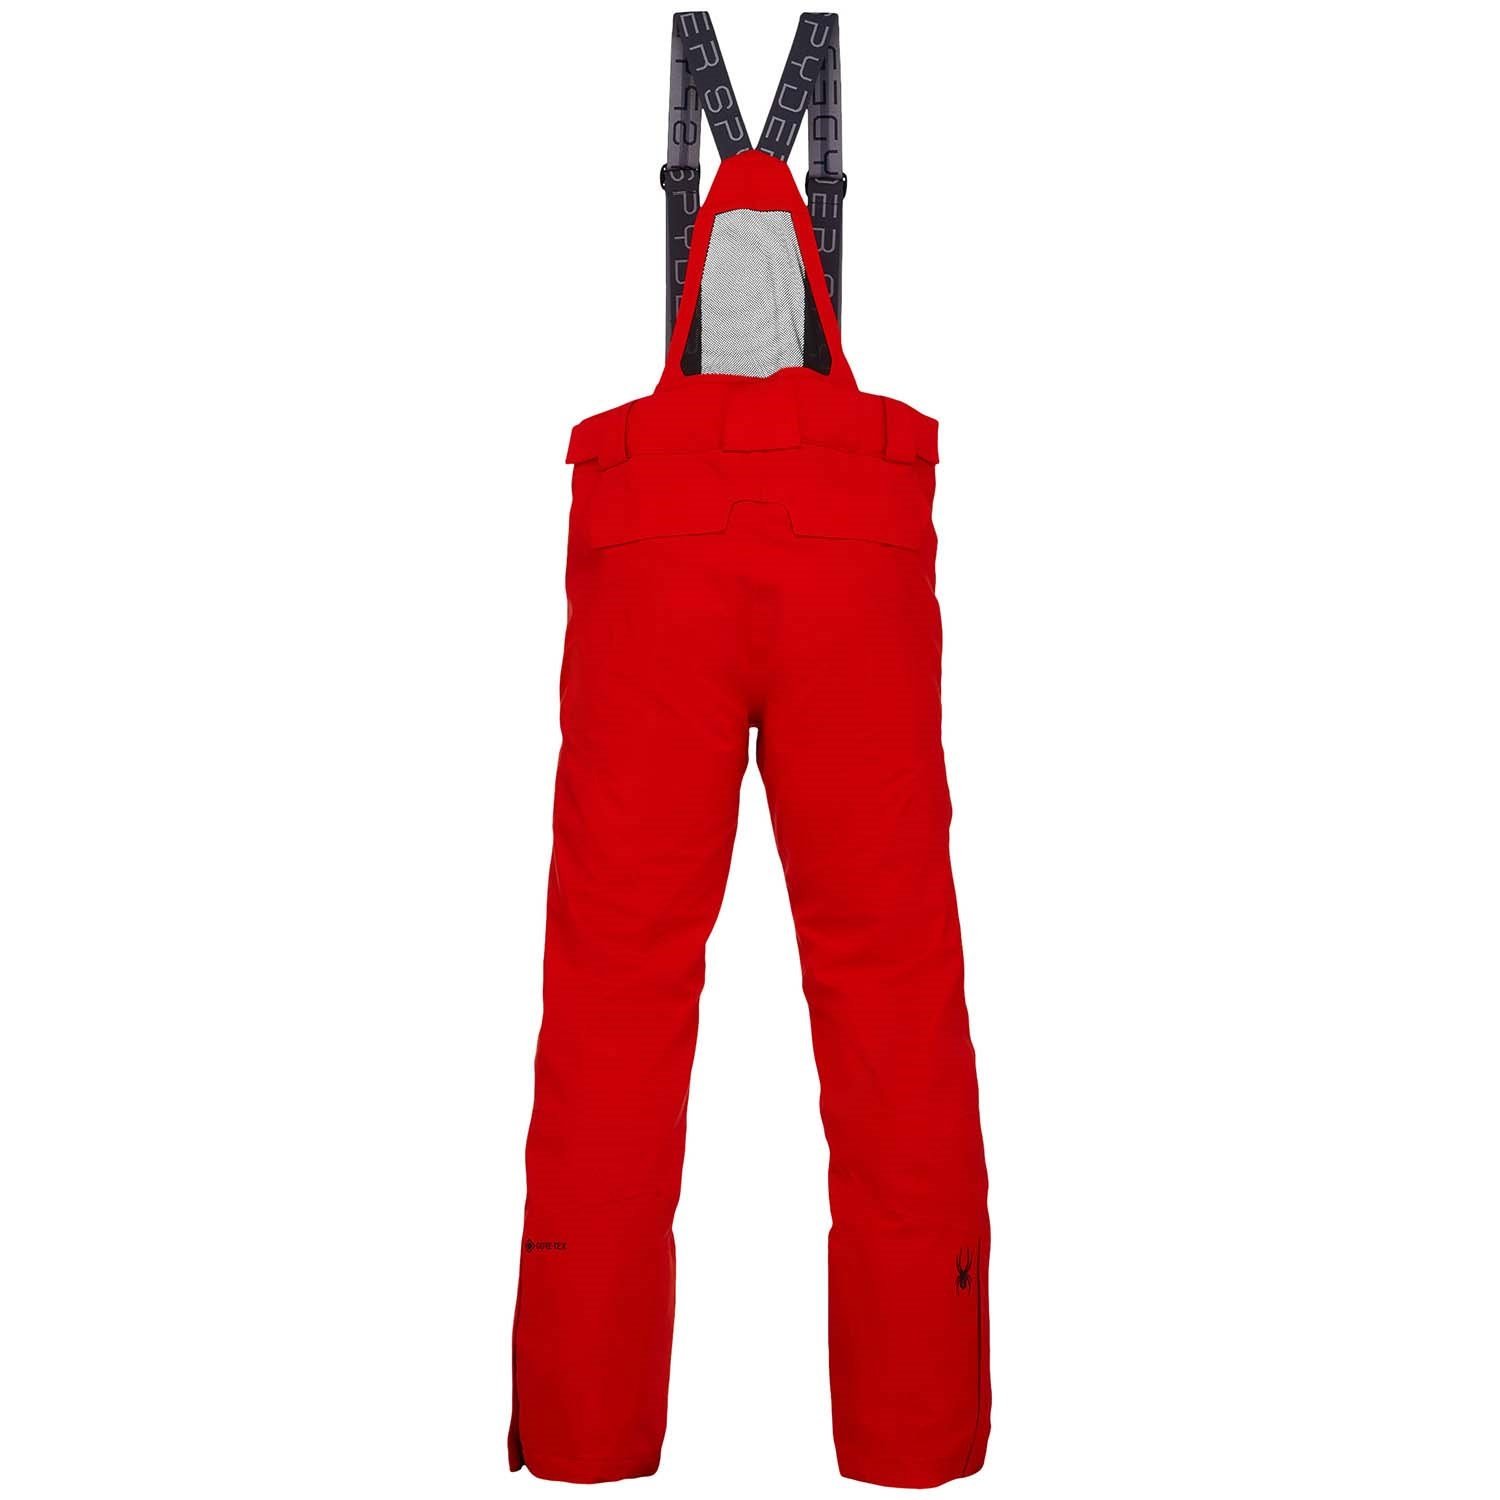 Spyder Dare Pants Lengths Insulated Technical Snow Pant - Men's ski pants